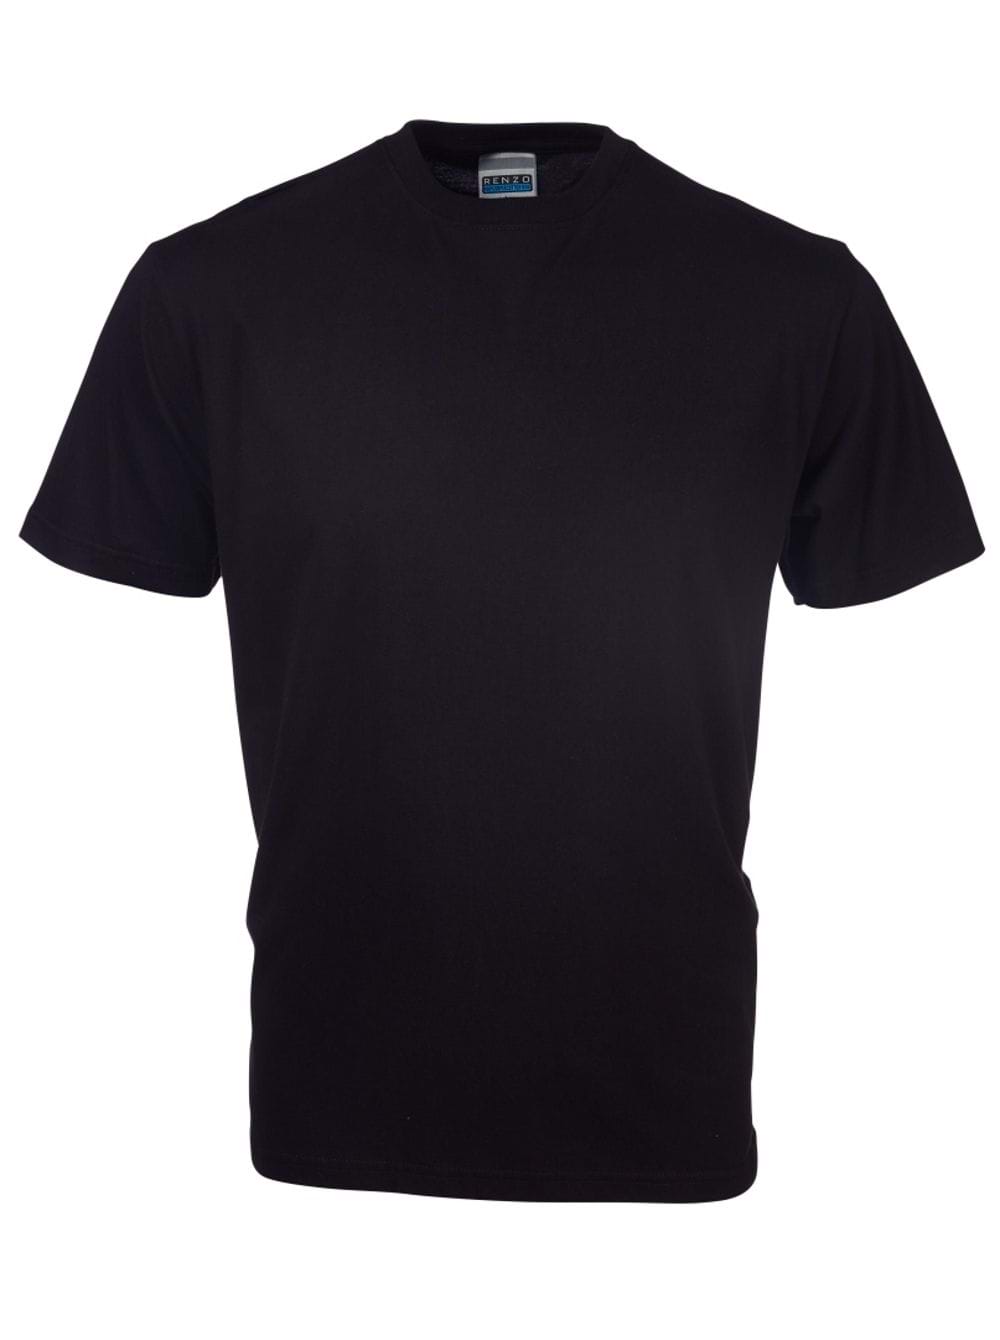 165G Crew Neck T-Shirt - Black / S